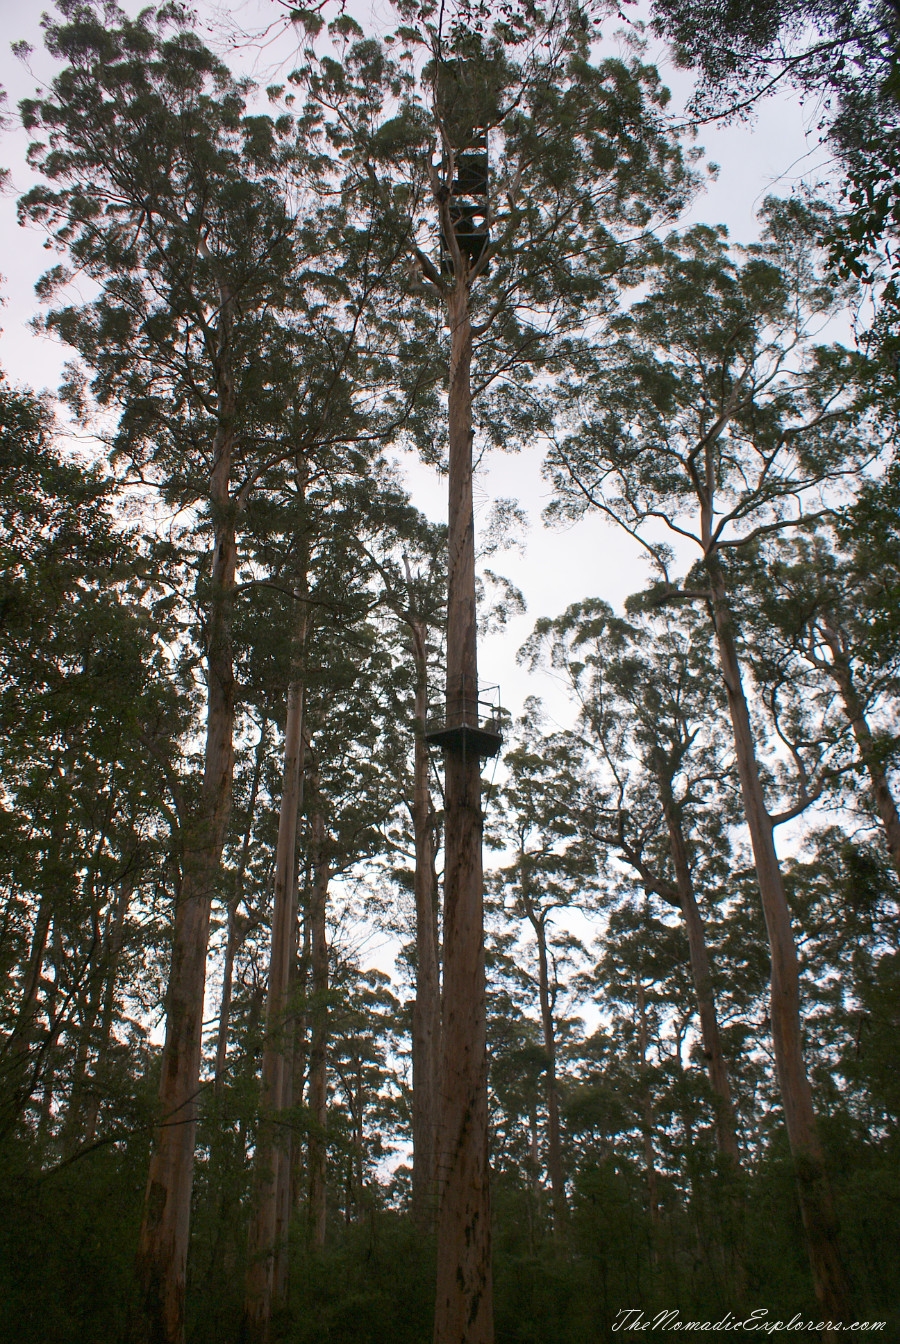 Australia, Western Australia, South West, Western Australia Trip. Day 7. Tall Timber Country / The Karri Forests Region, , 